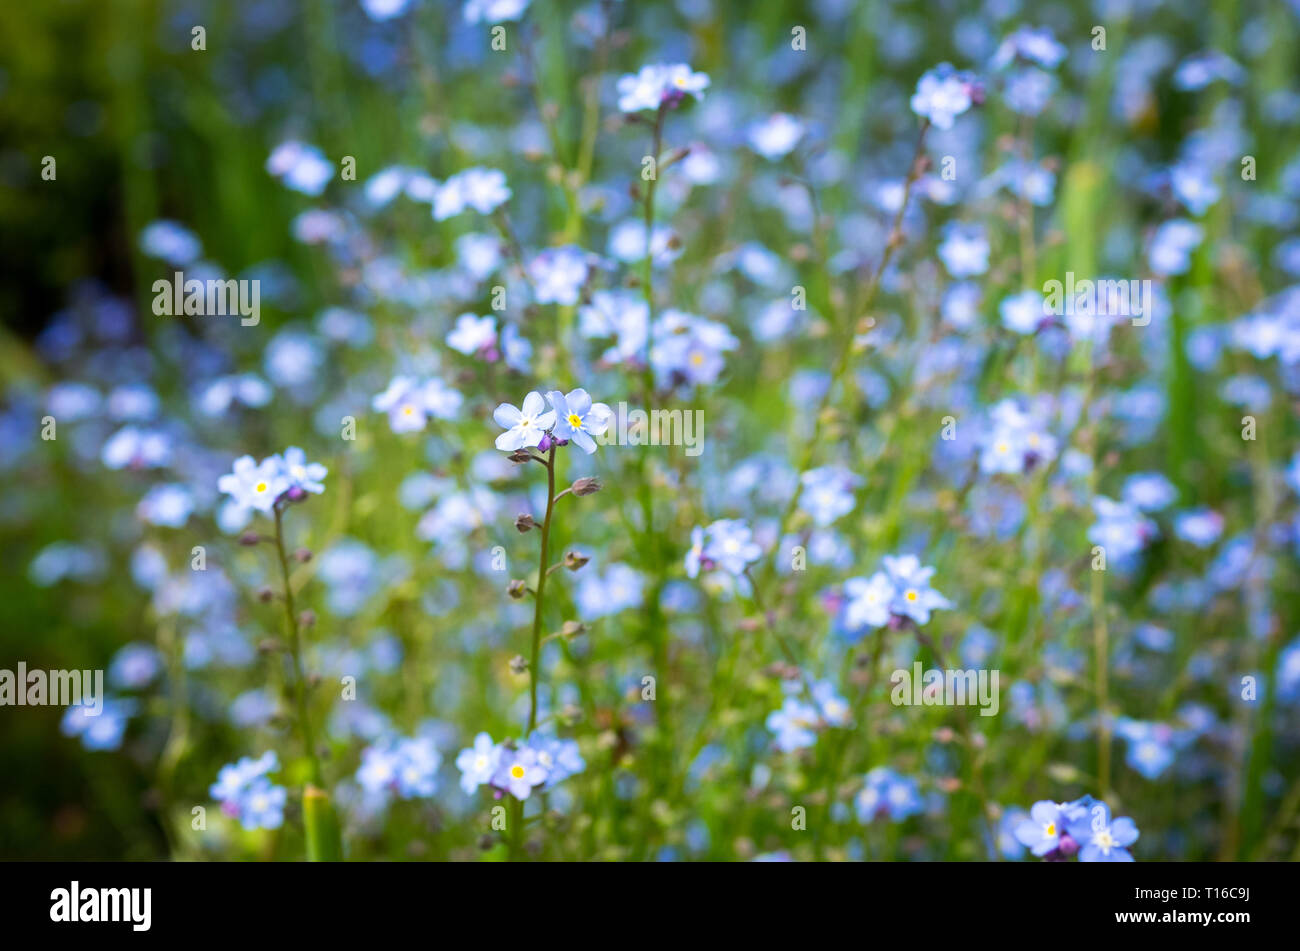 A field of alpine forget-me-not (Myosotis alpestris) flowers. Stock Photo